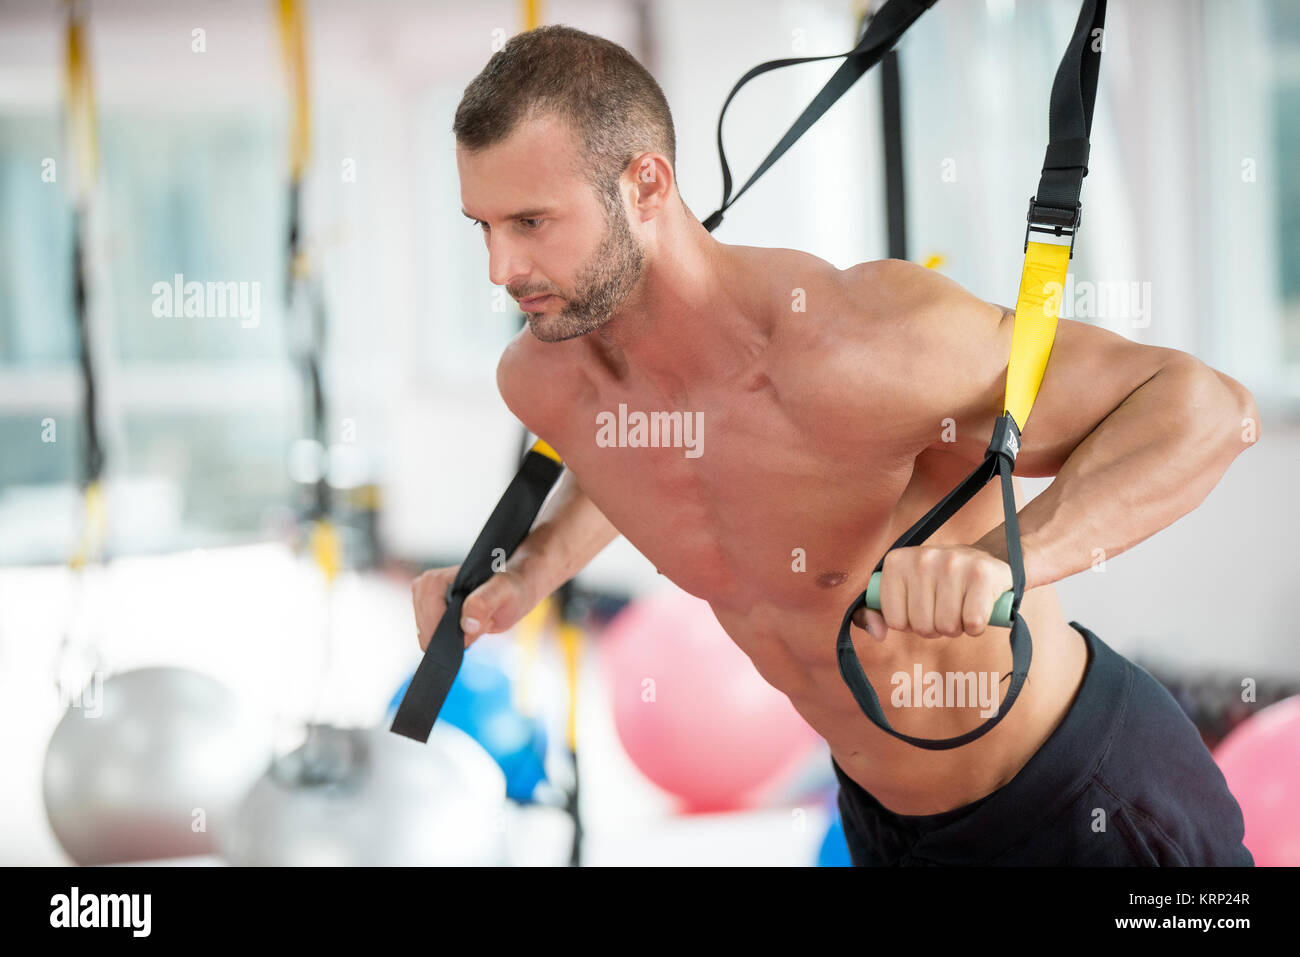 Kerl, Push-ups training Arme mit trx fitness Bänder in der Turnhalle Konzept workout gesunder Lebensstil Sport Stockfoto